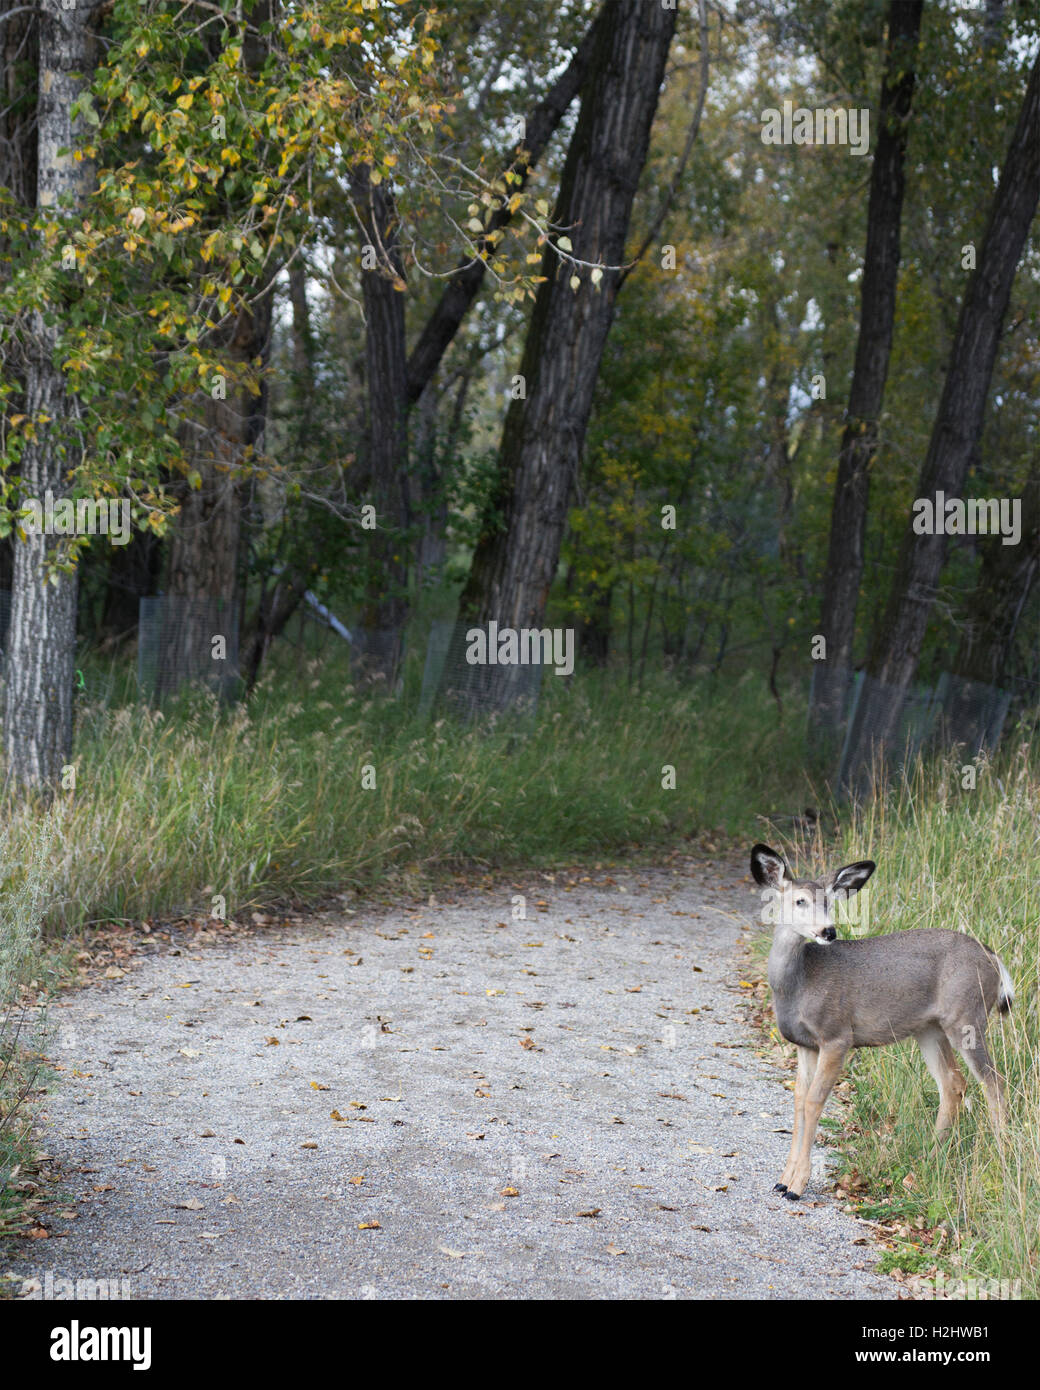 Mule deer (Odocoileus hemionus) in urban wildlife sanctuary Stock Photo